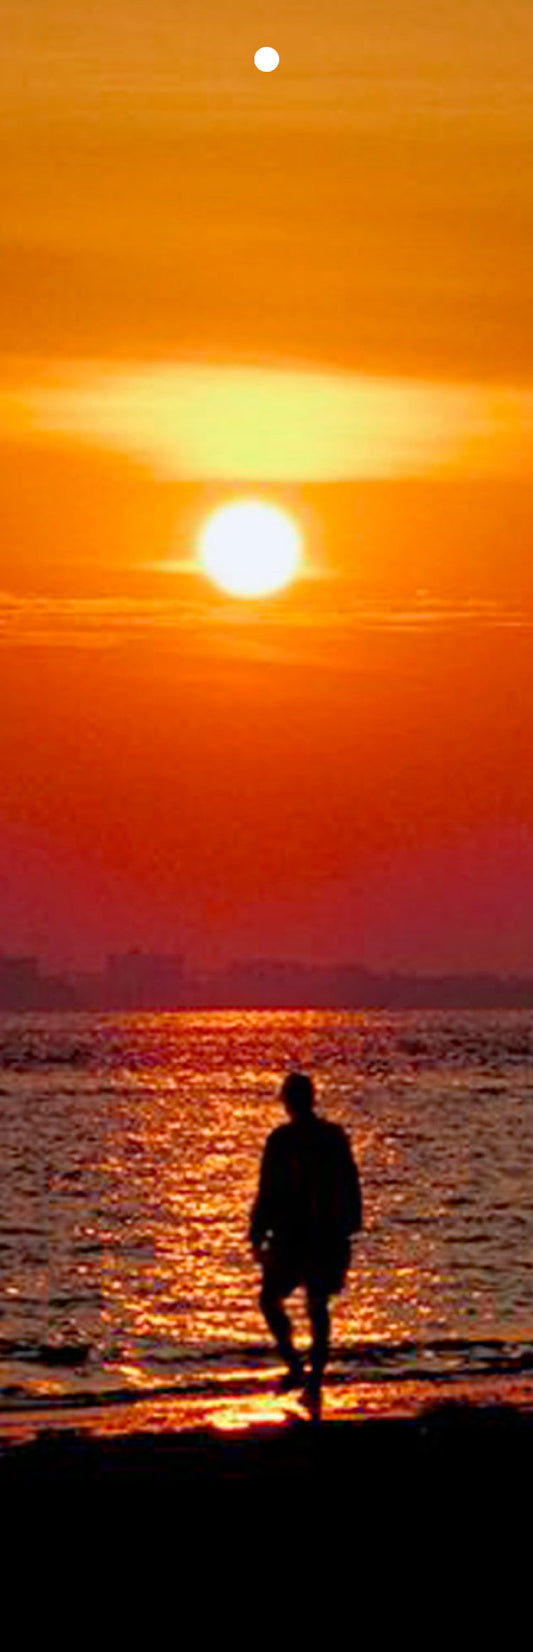 Man Walking on the Beach at Sunset